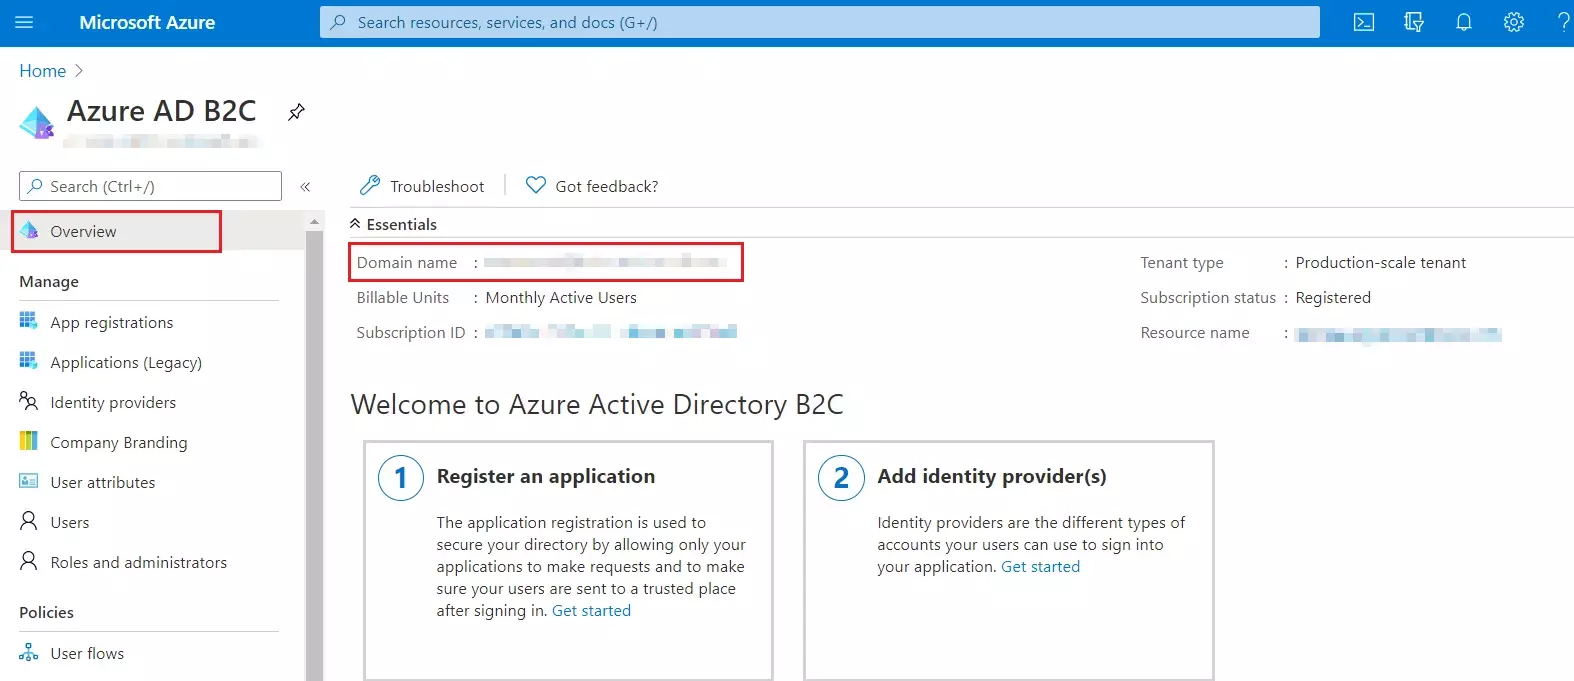 SAML Single Sign-On (SSO) using Azure AD B2C as Identity Provider (IdP),for SAML 2.0 Azure AD B2C, B2C tenant ID Reco